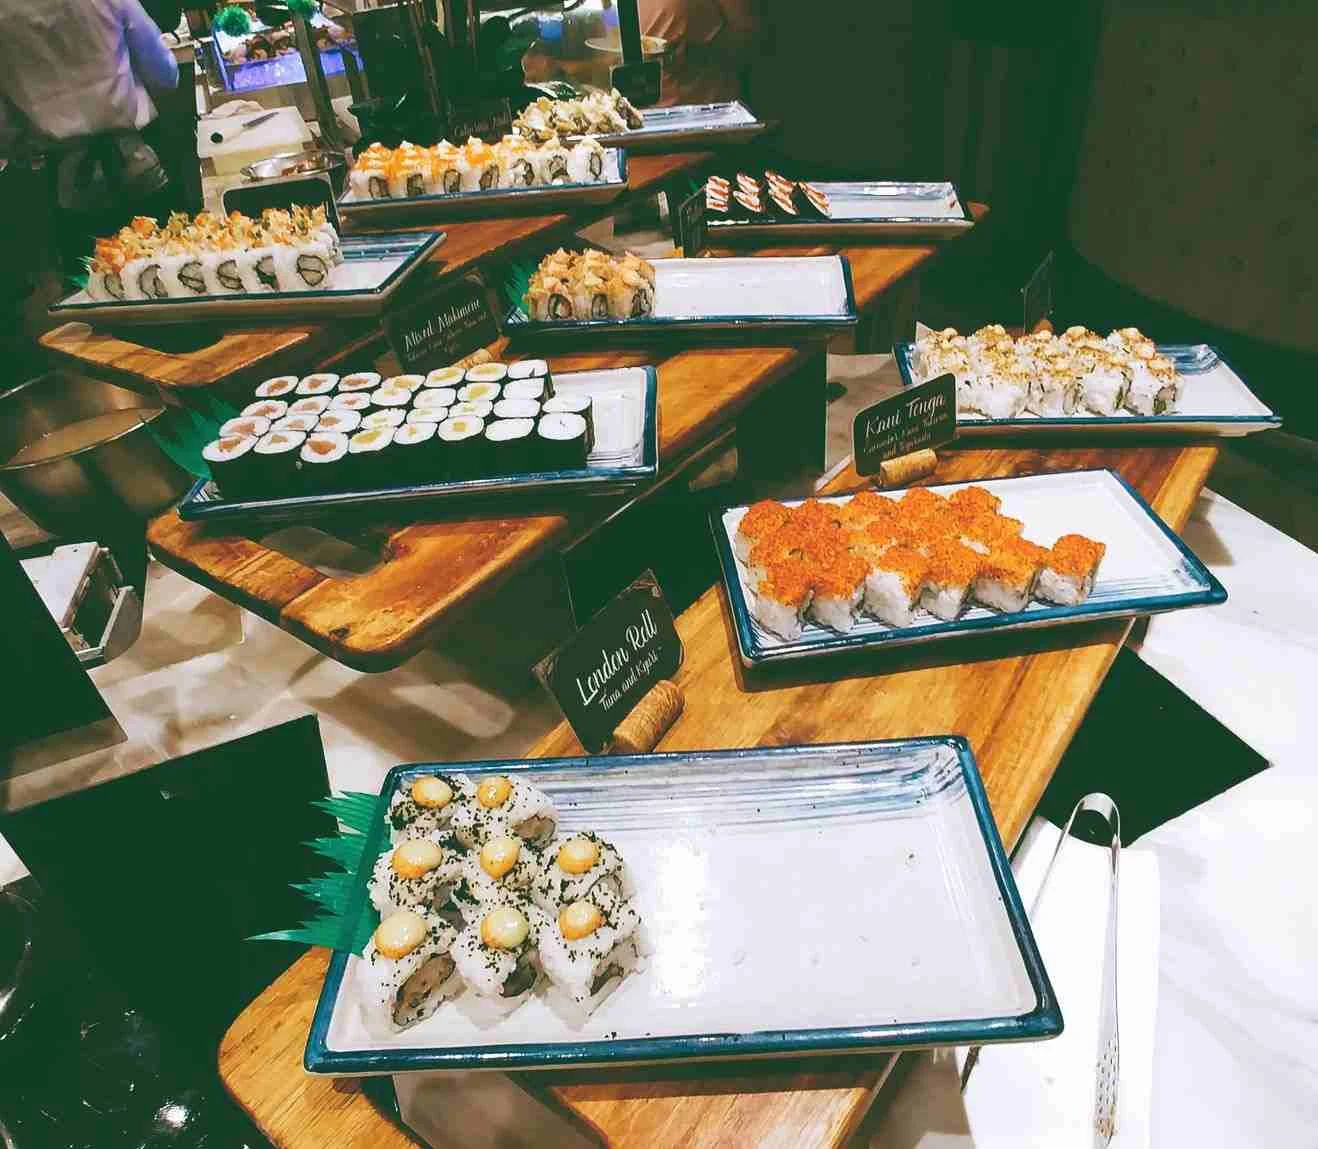 Vikings Luxury Buffet: sashimi and maki at the Japanese food station